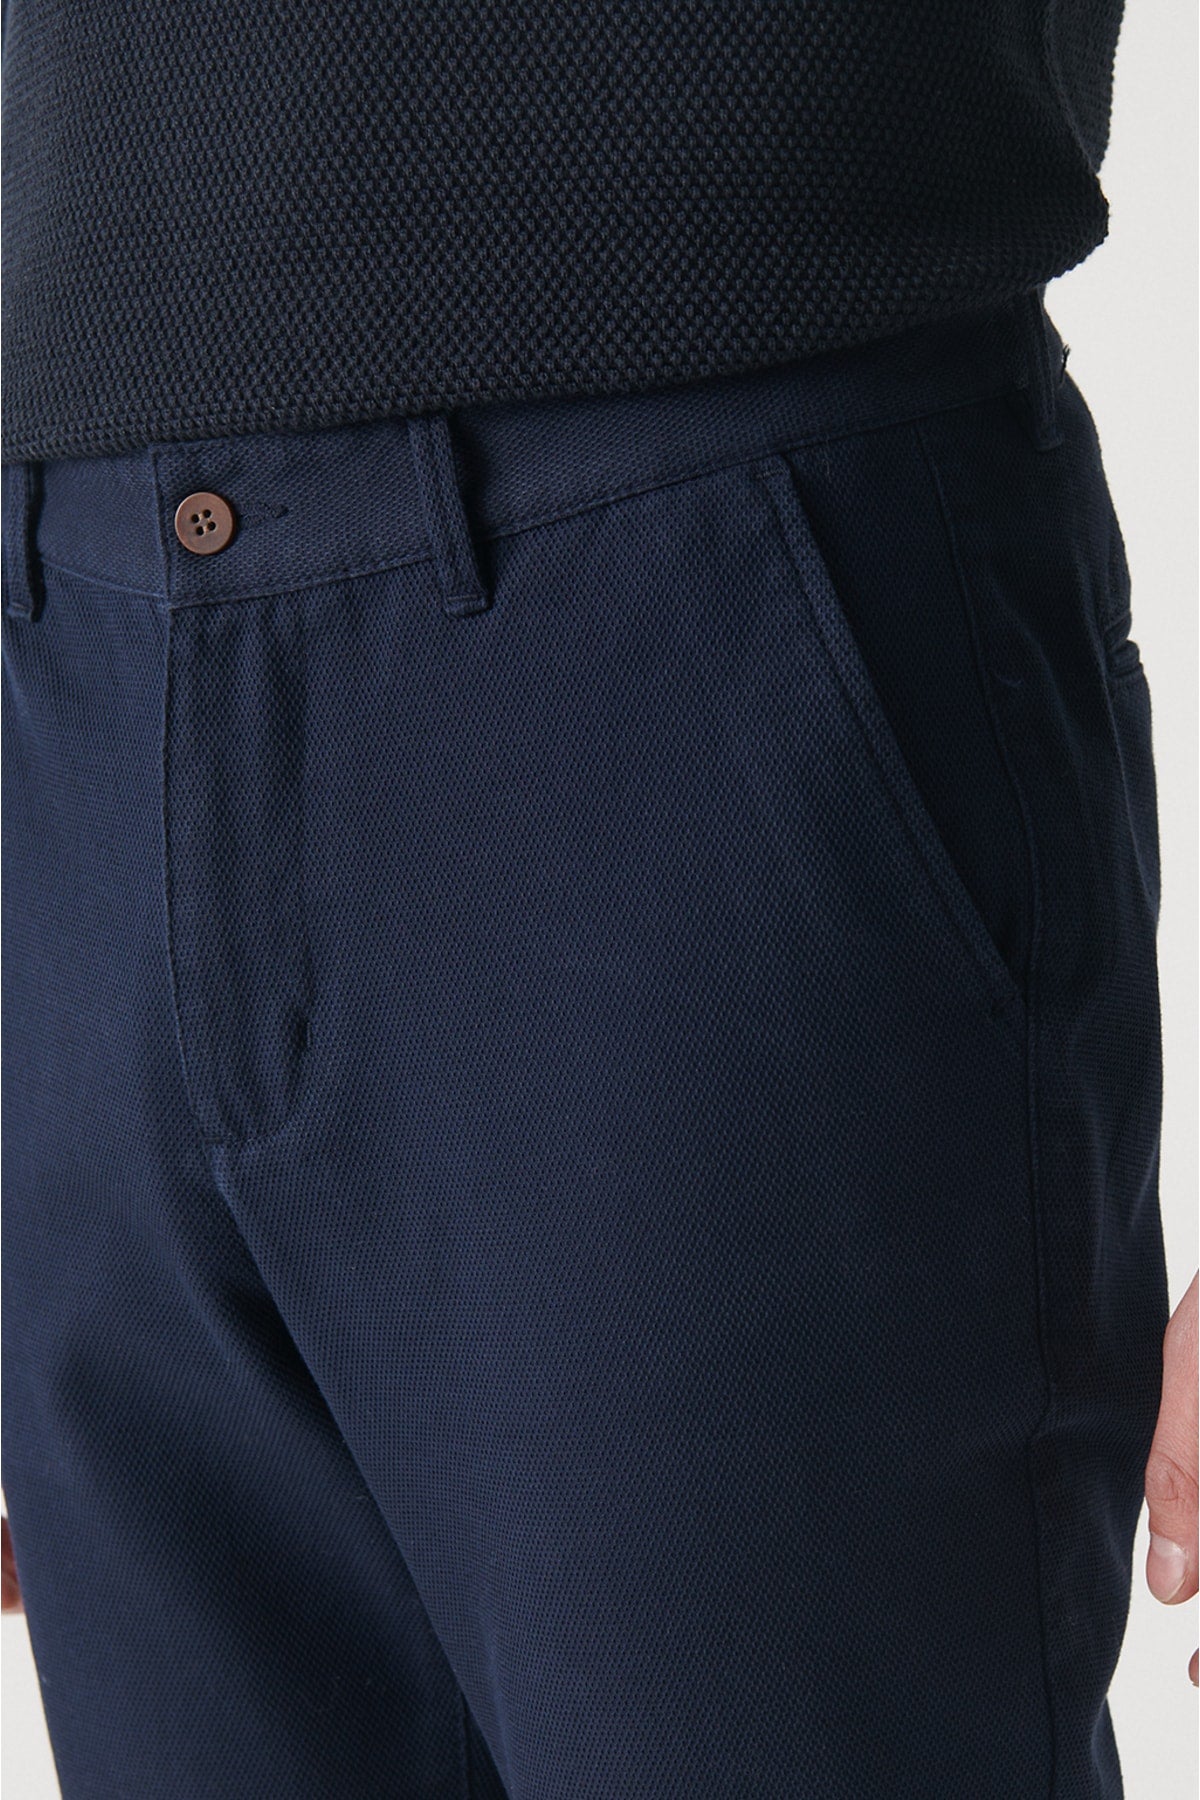 Men's navy blue honeycomb textured cotton slim fit pants a22y3027